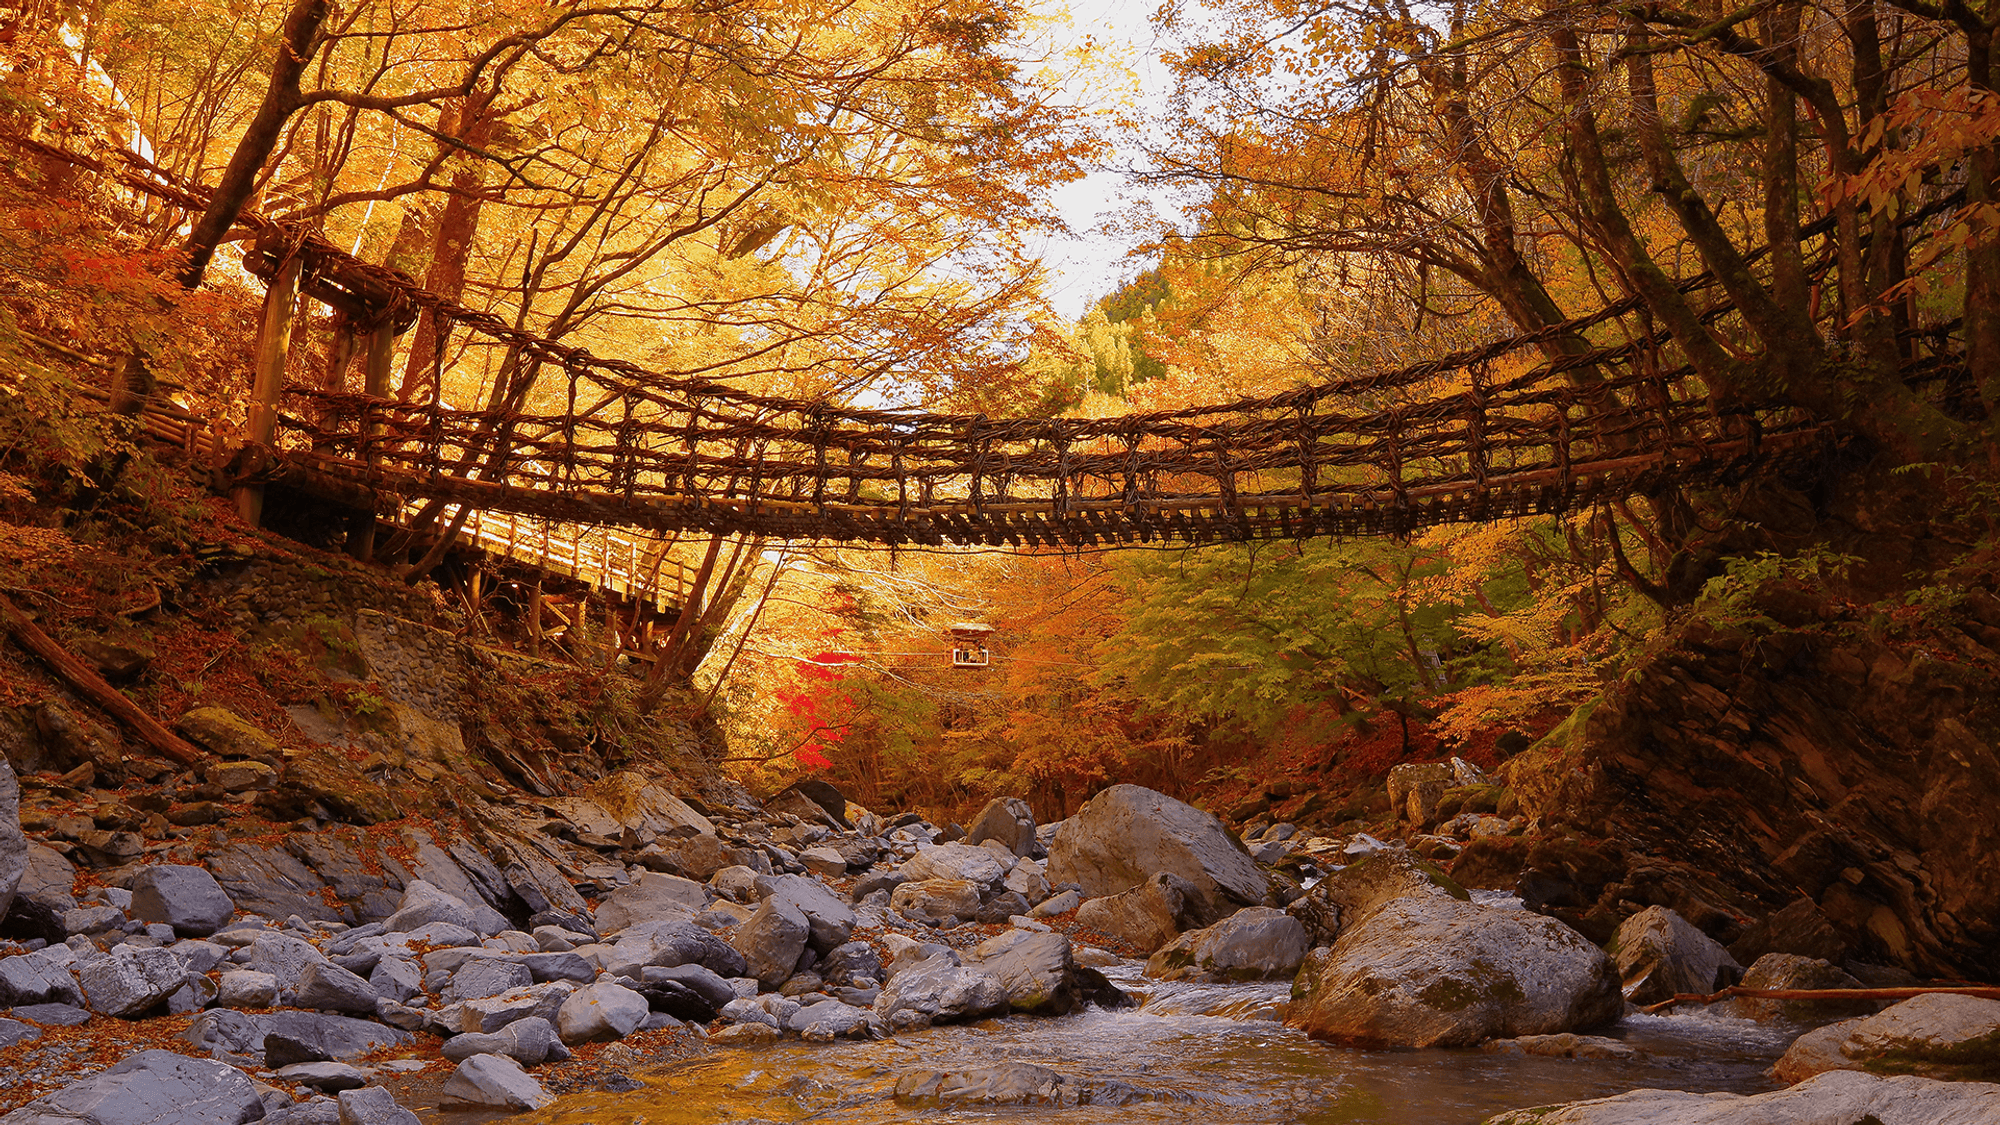 Kazurabashi, suspension bridges constructed from vines